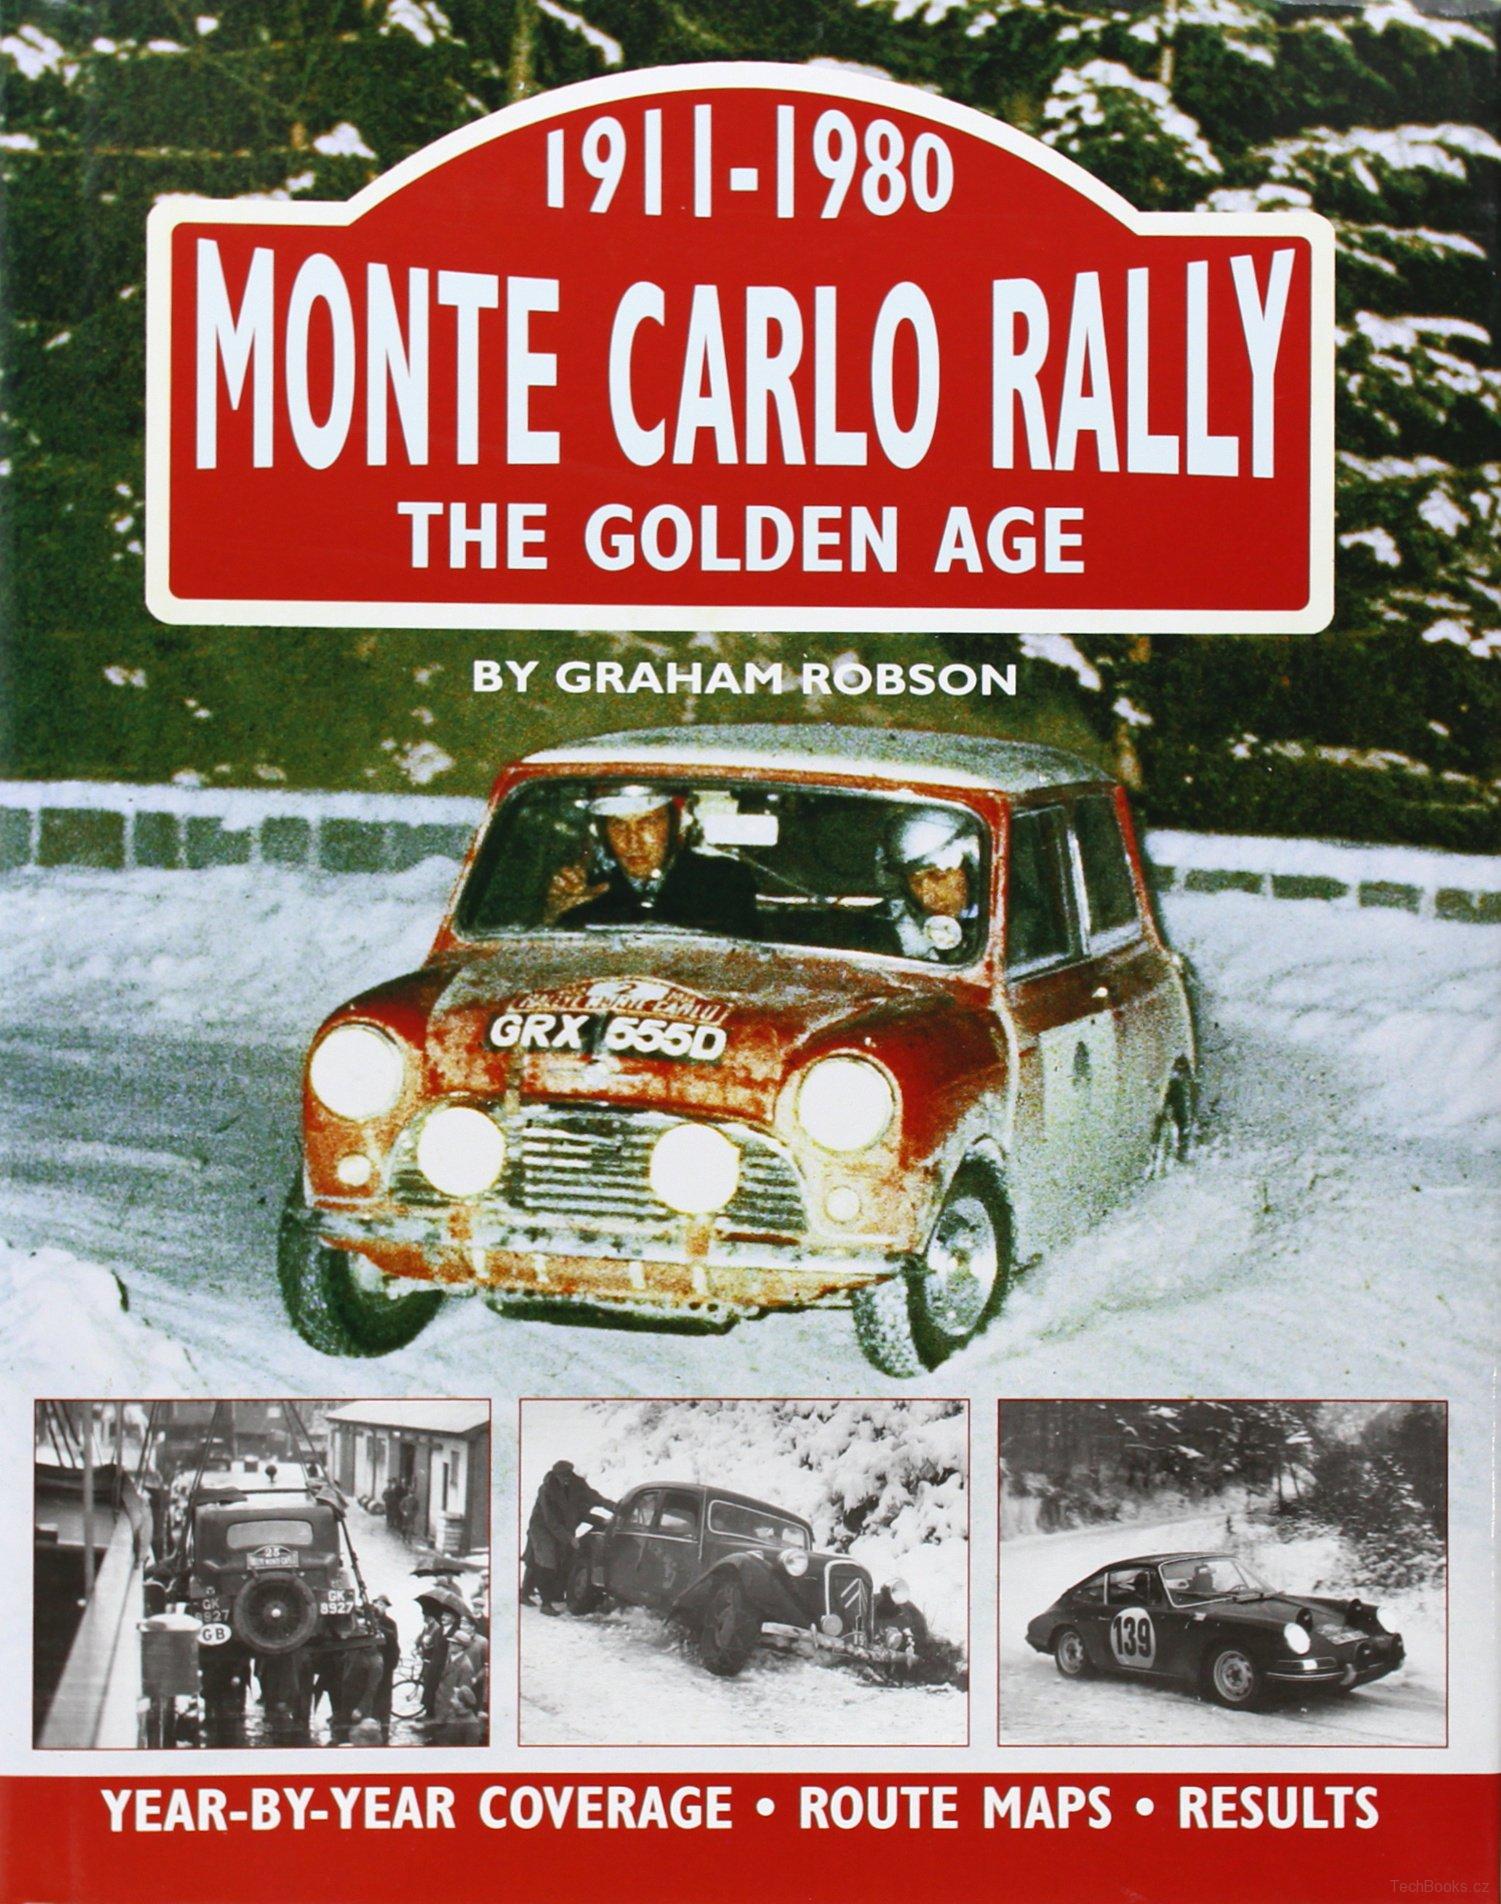 Monte Carlo Rally: The Golden Age 1911-1980